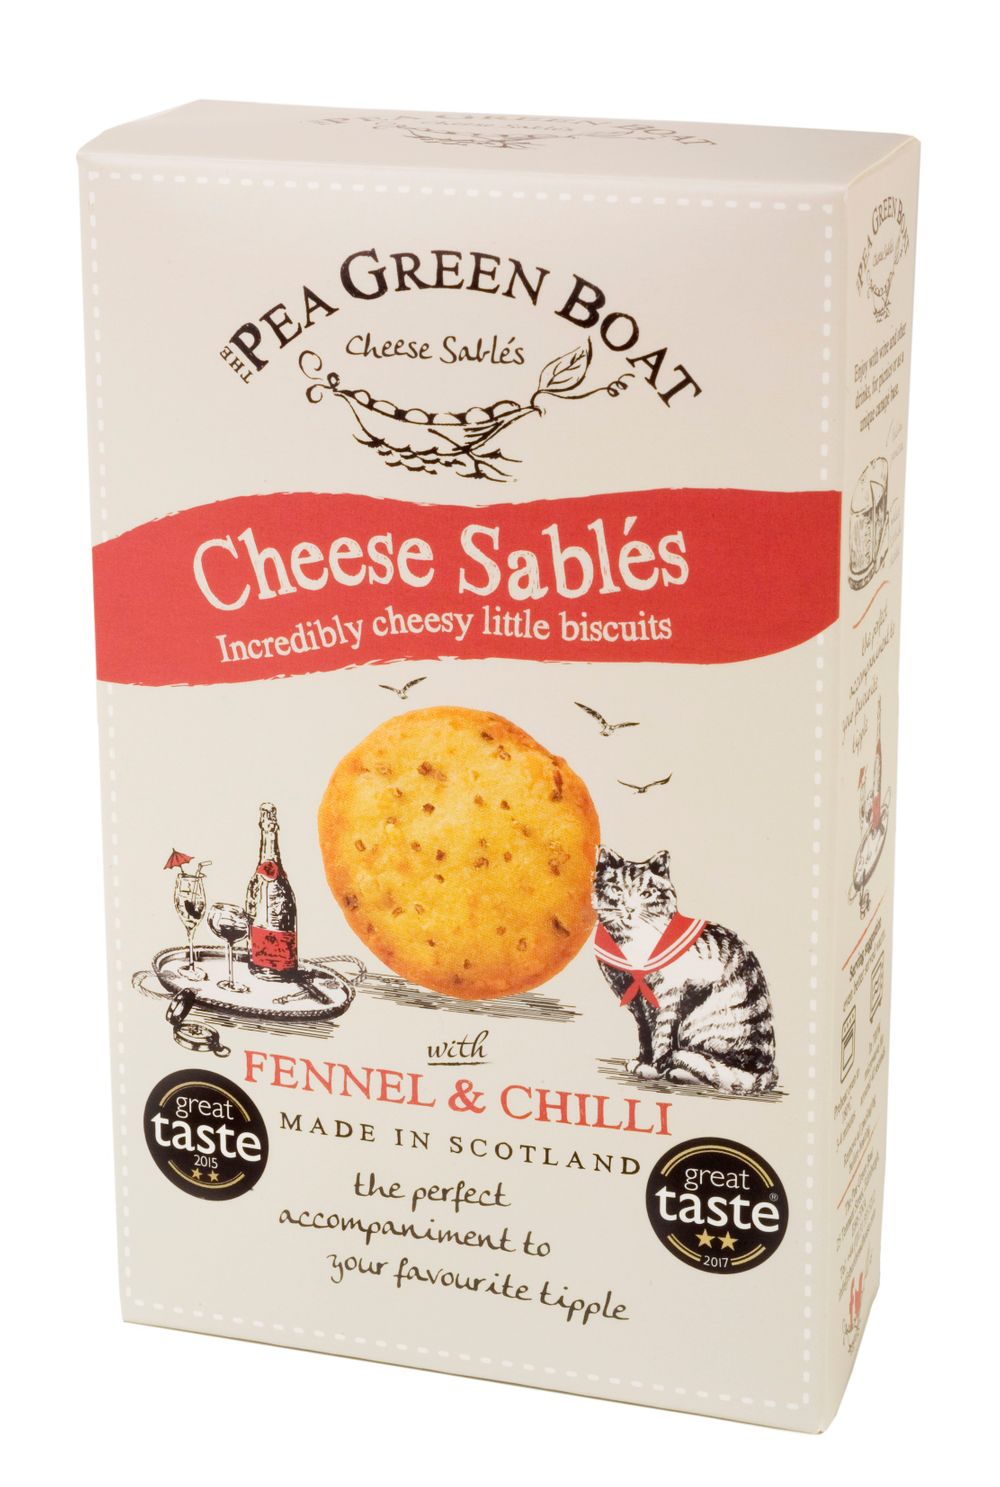 Cheese Sablés - Fennel & Chili